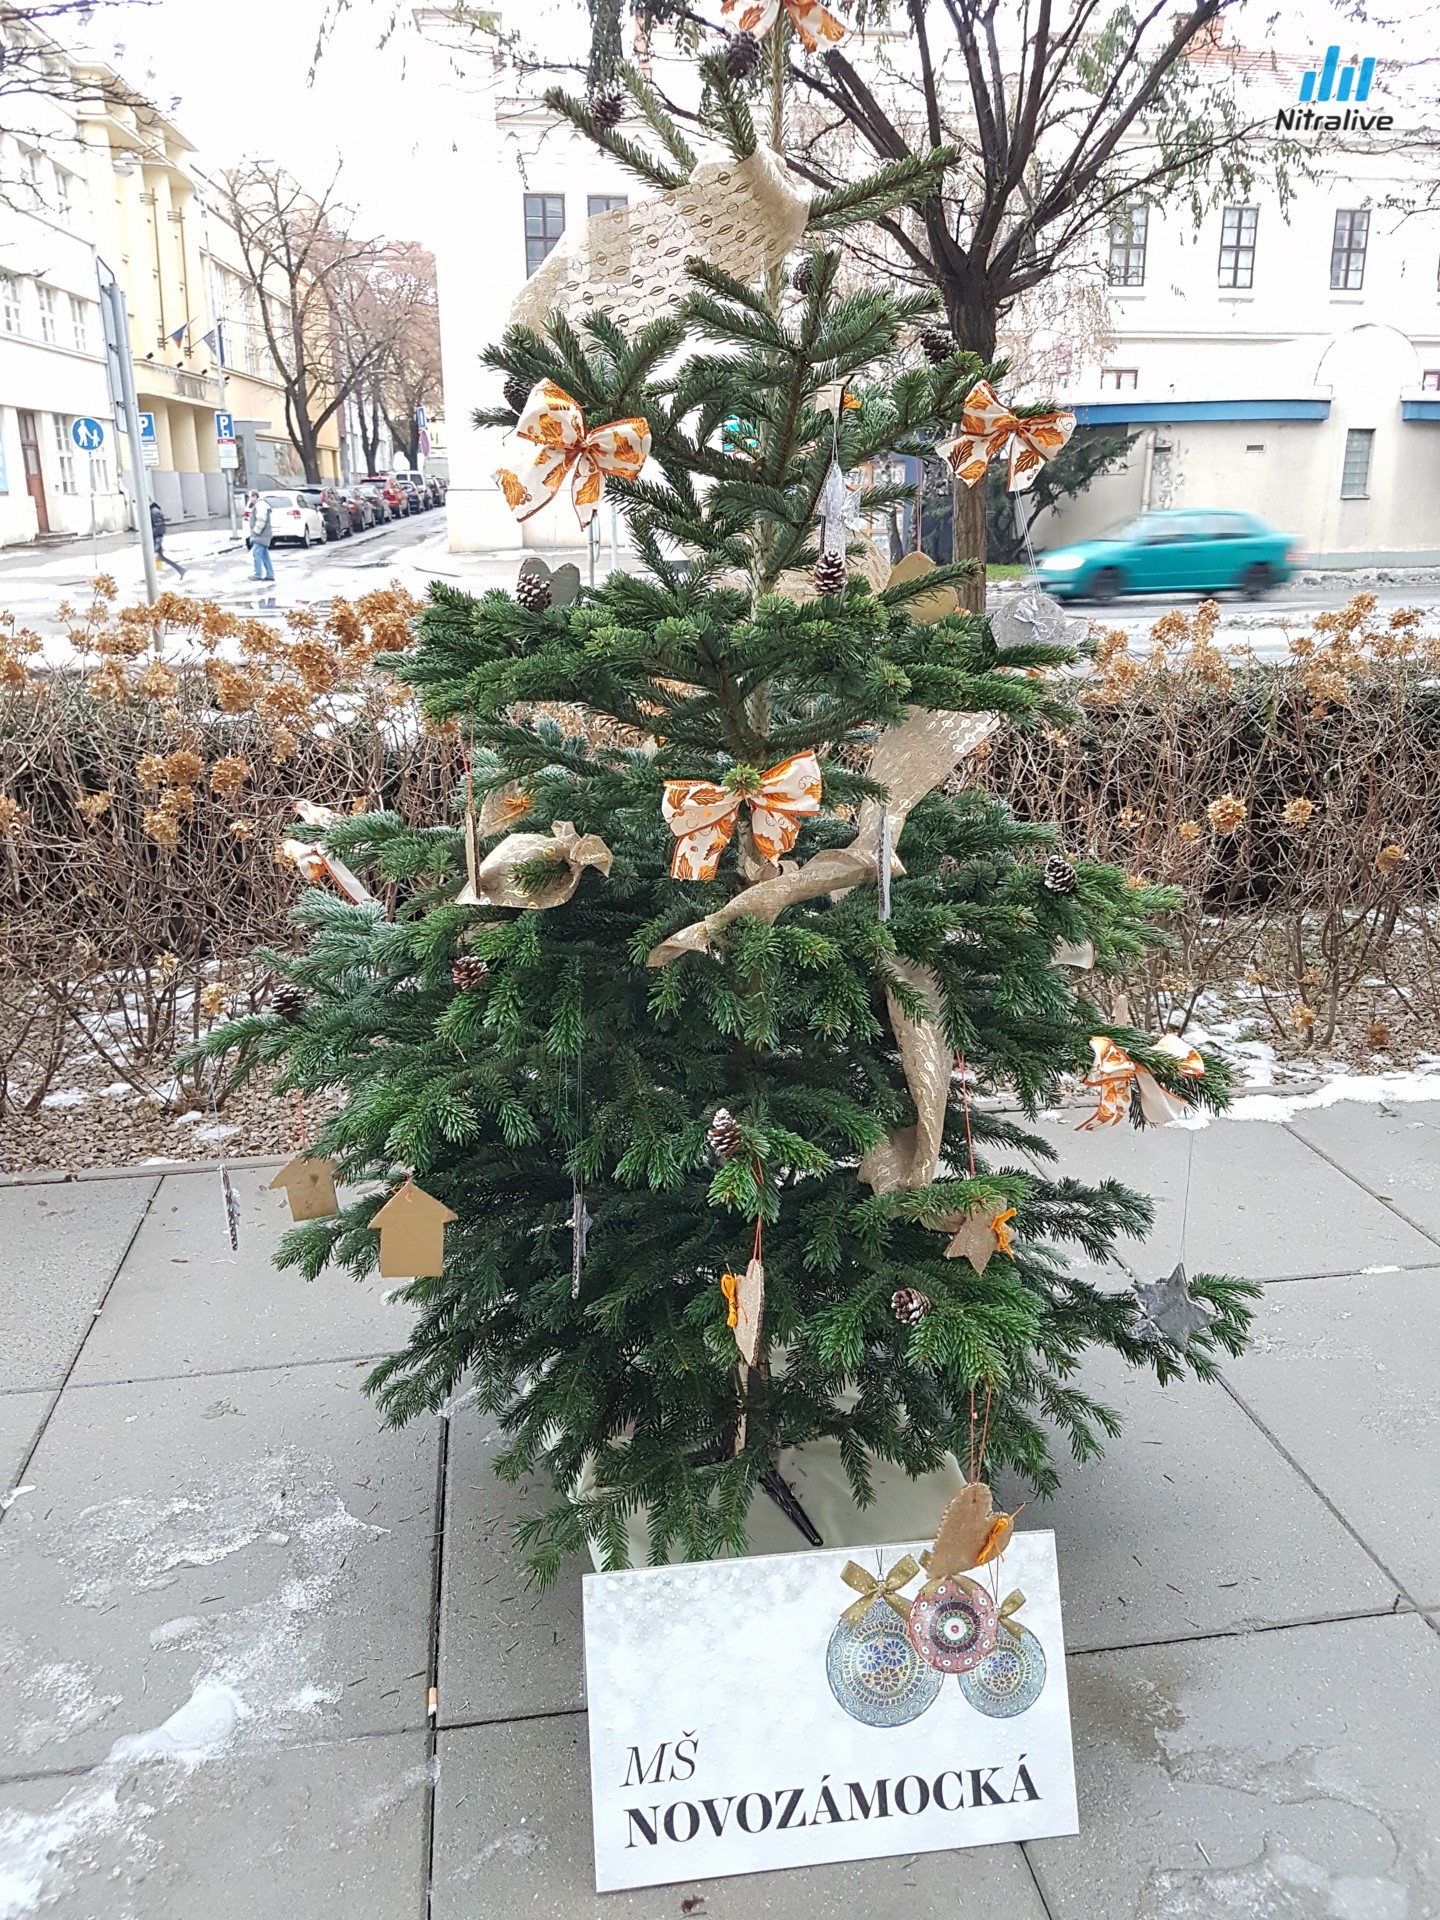 Deti z materských škôl v Nitre zdobili vianočné stromčeky, hlasujte za najkrajší